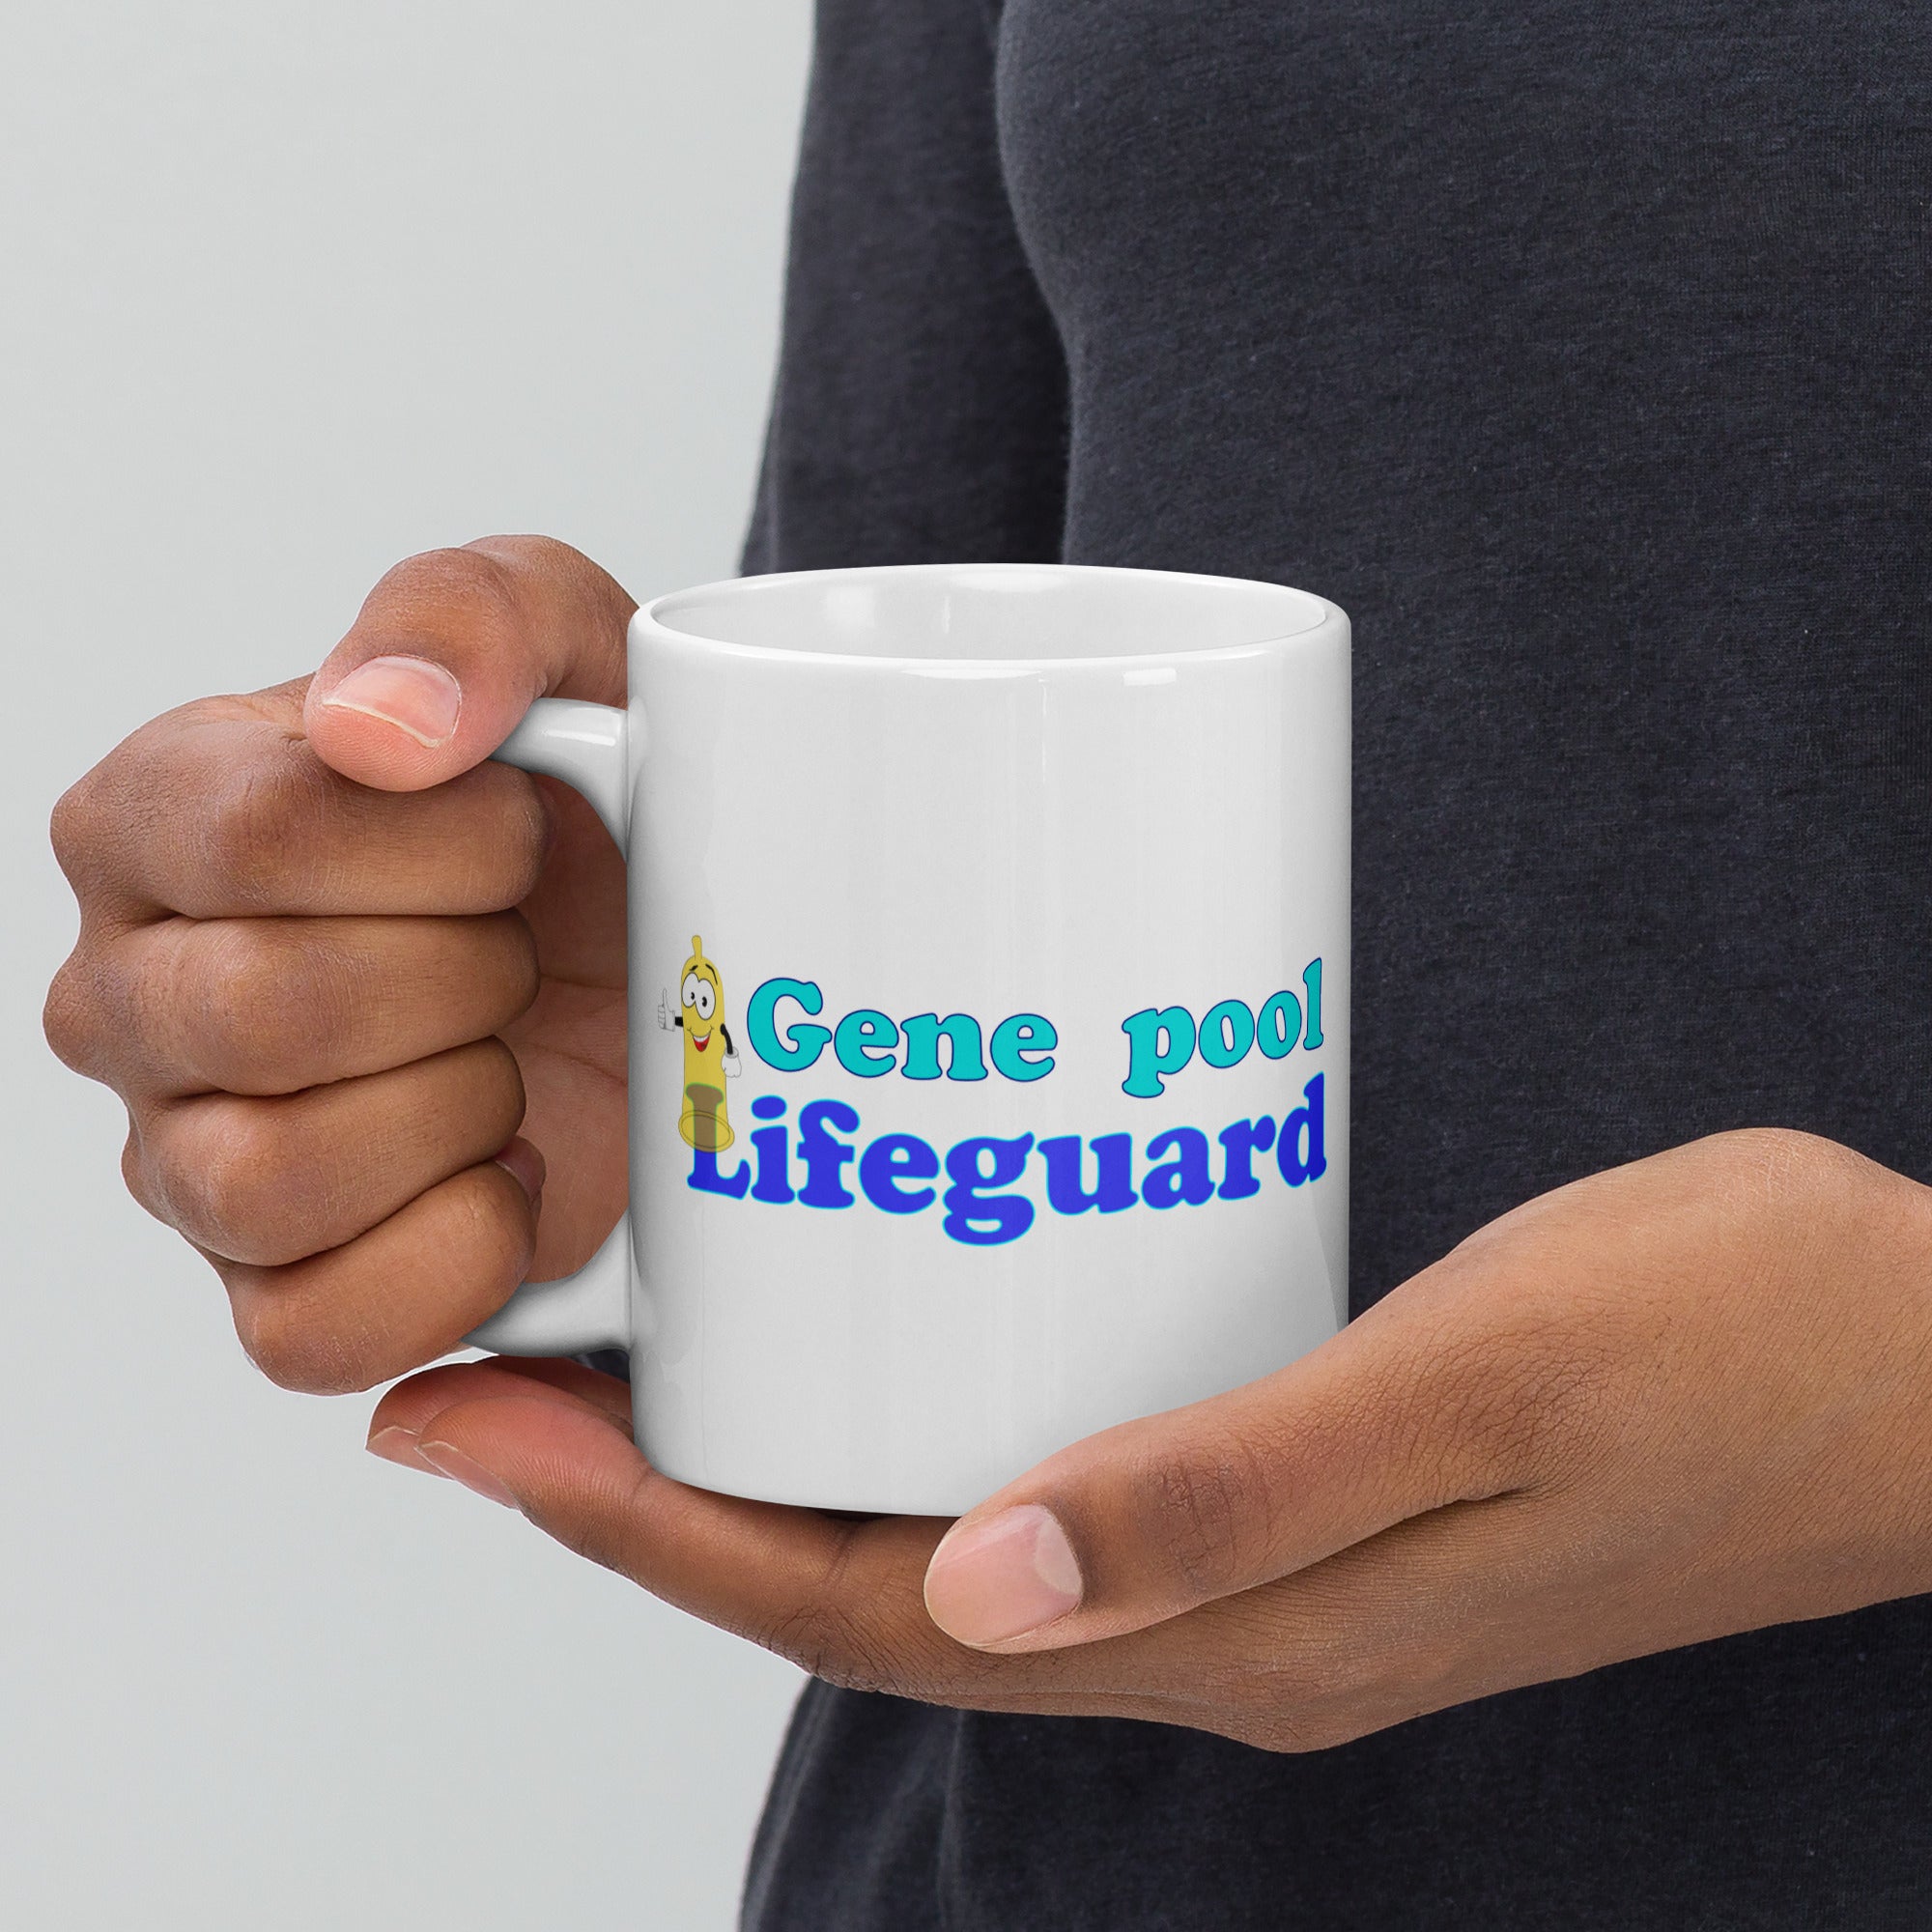 11oz ceramic mug with caption 'gene pool lifeguard' and a condom character